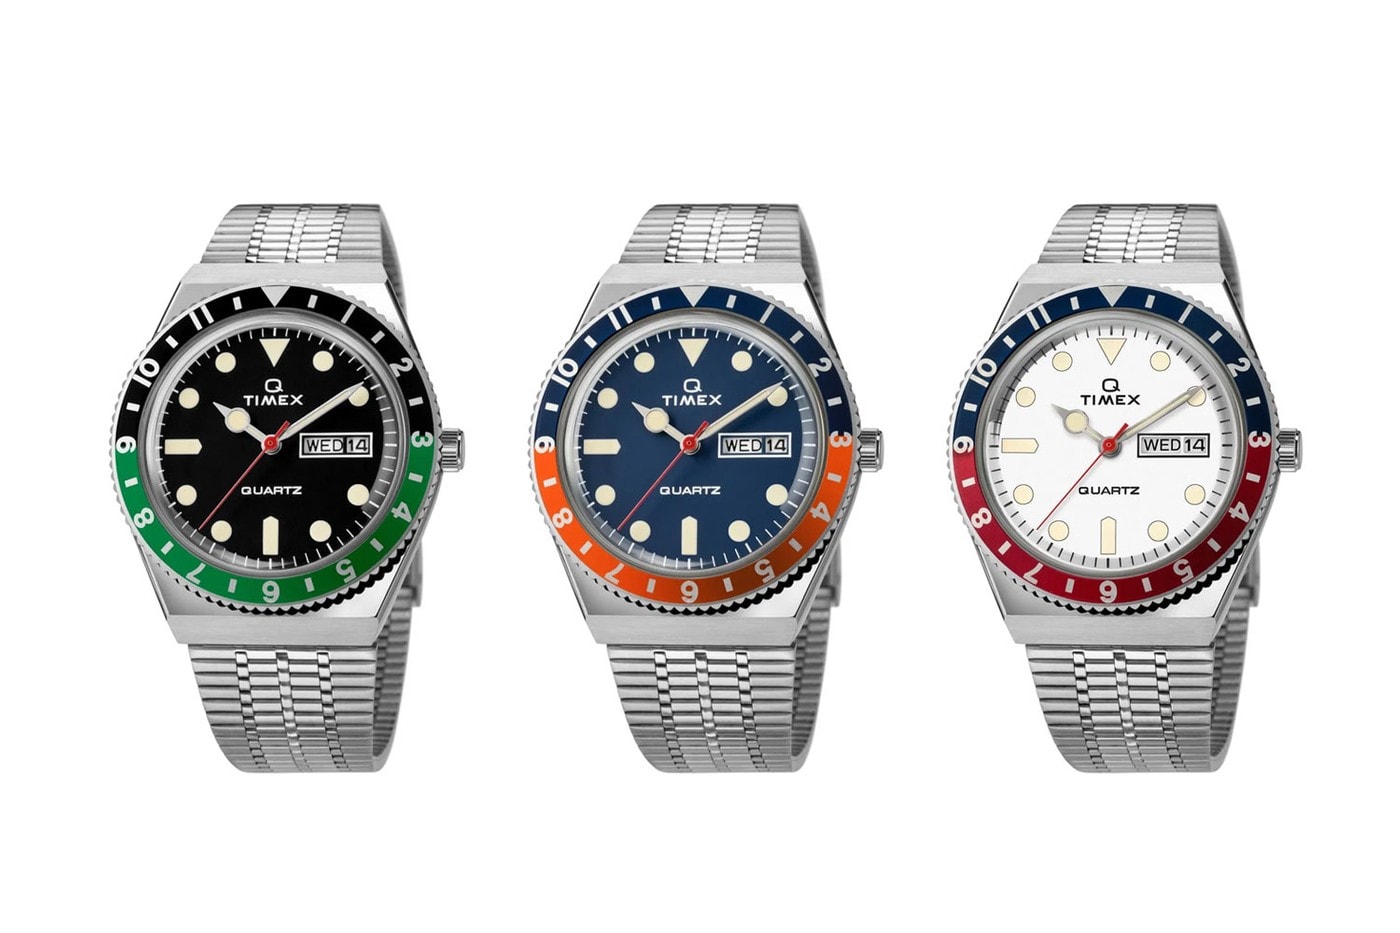 Timex 推出 3 款全新配色 Q Timex 腕錶